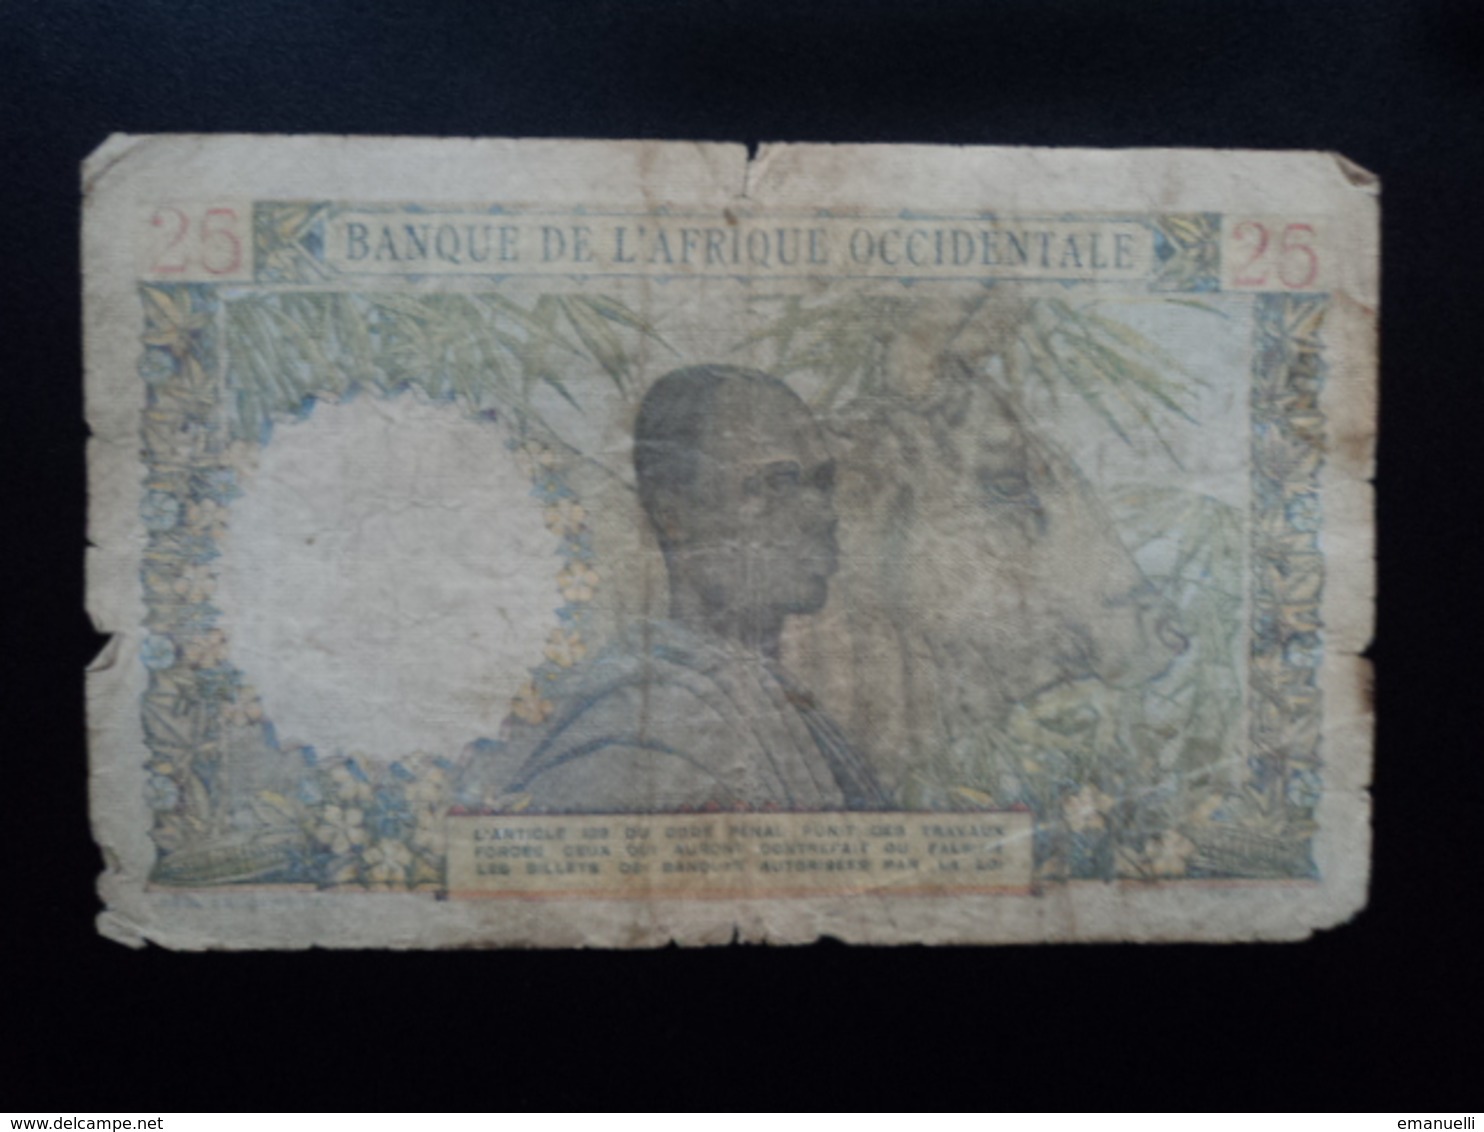 AFRIQUE OCCIDENTALE FRANCAISE : 25 FRANCS  27.12.1948  P 38   état B - Other - Africa